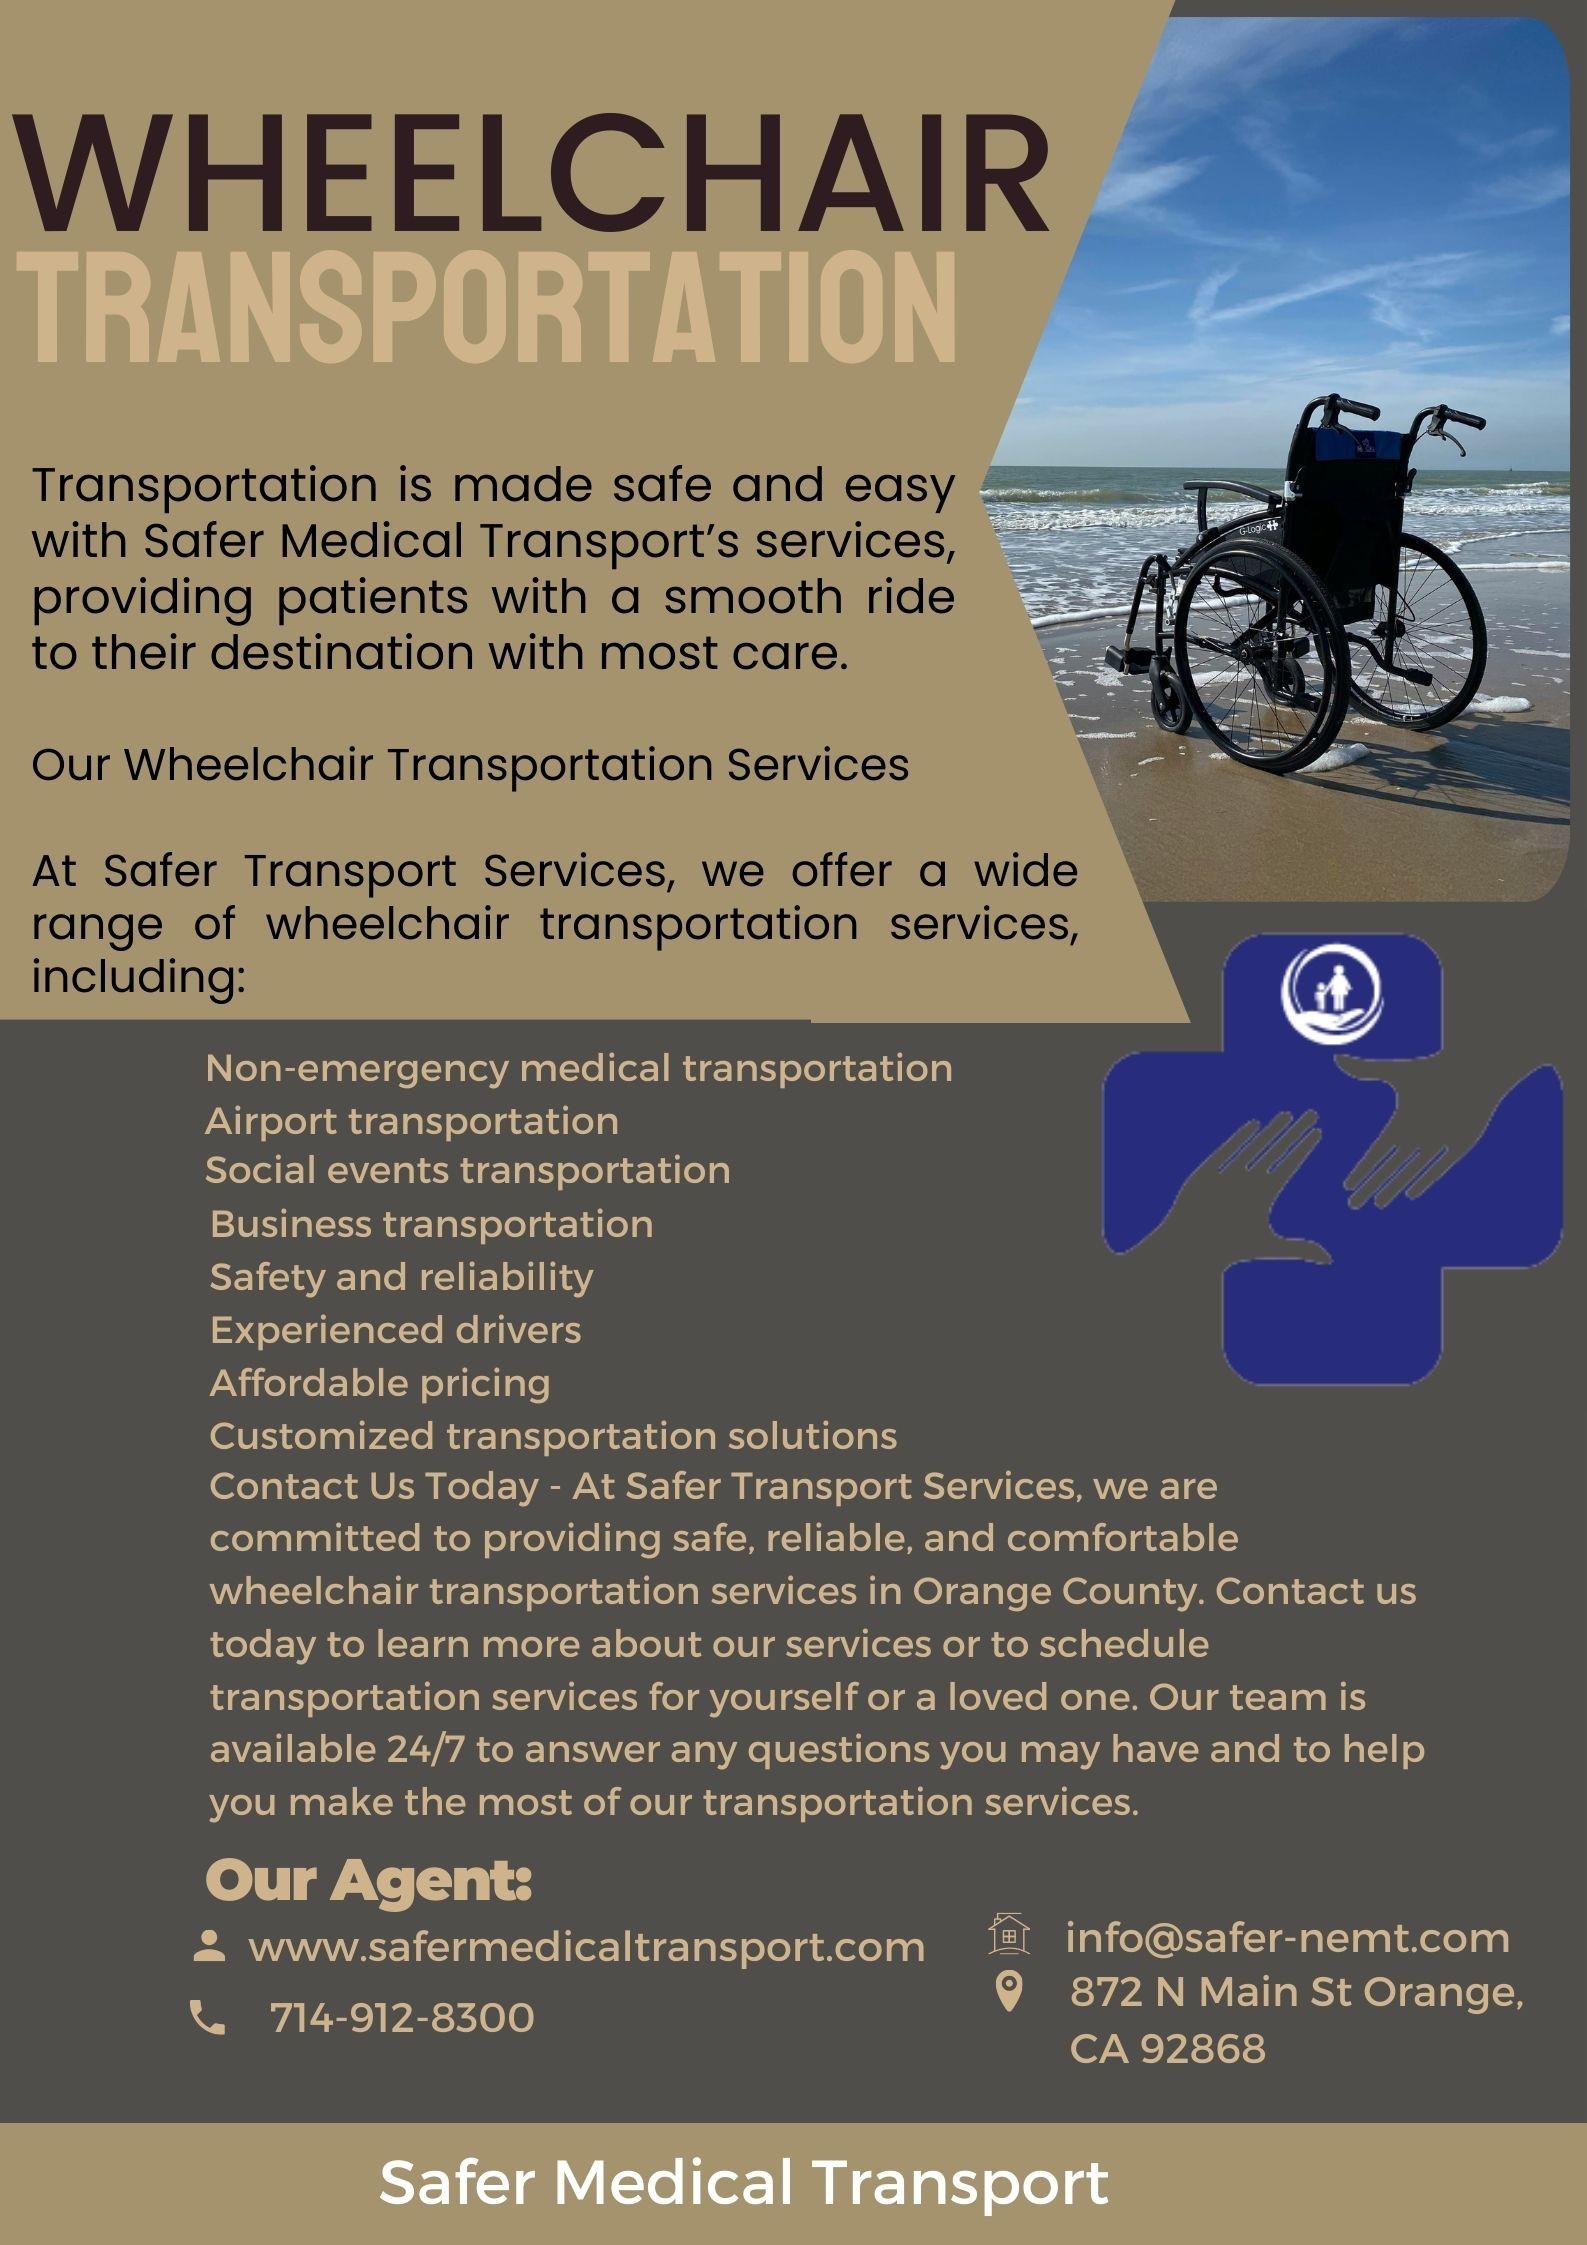 Wheelchair Transportation - Safer Medical Transport